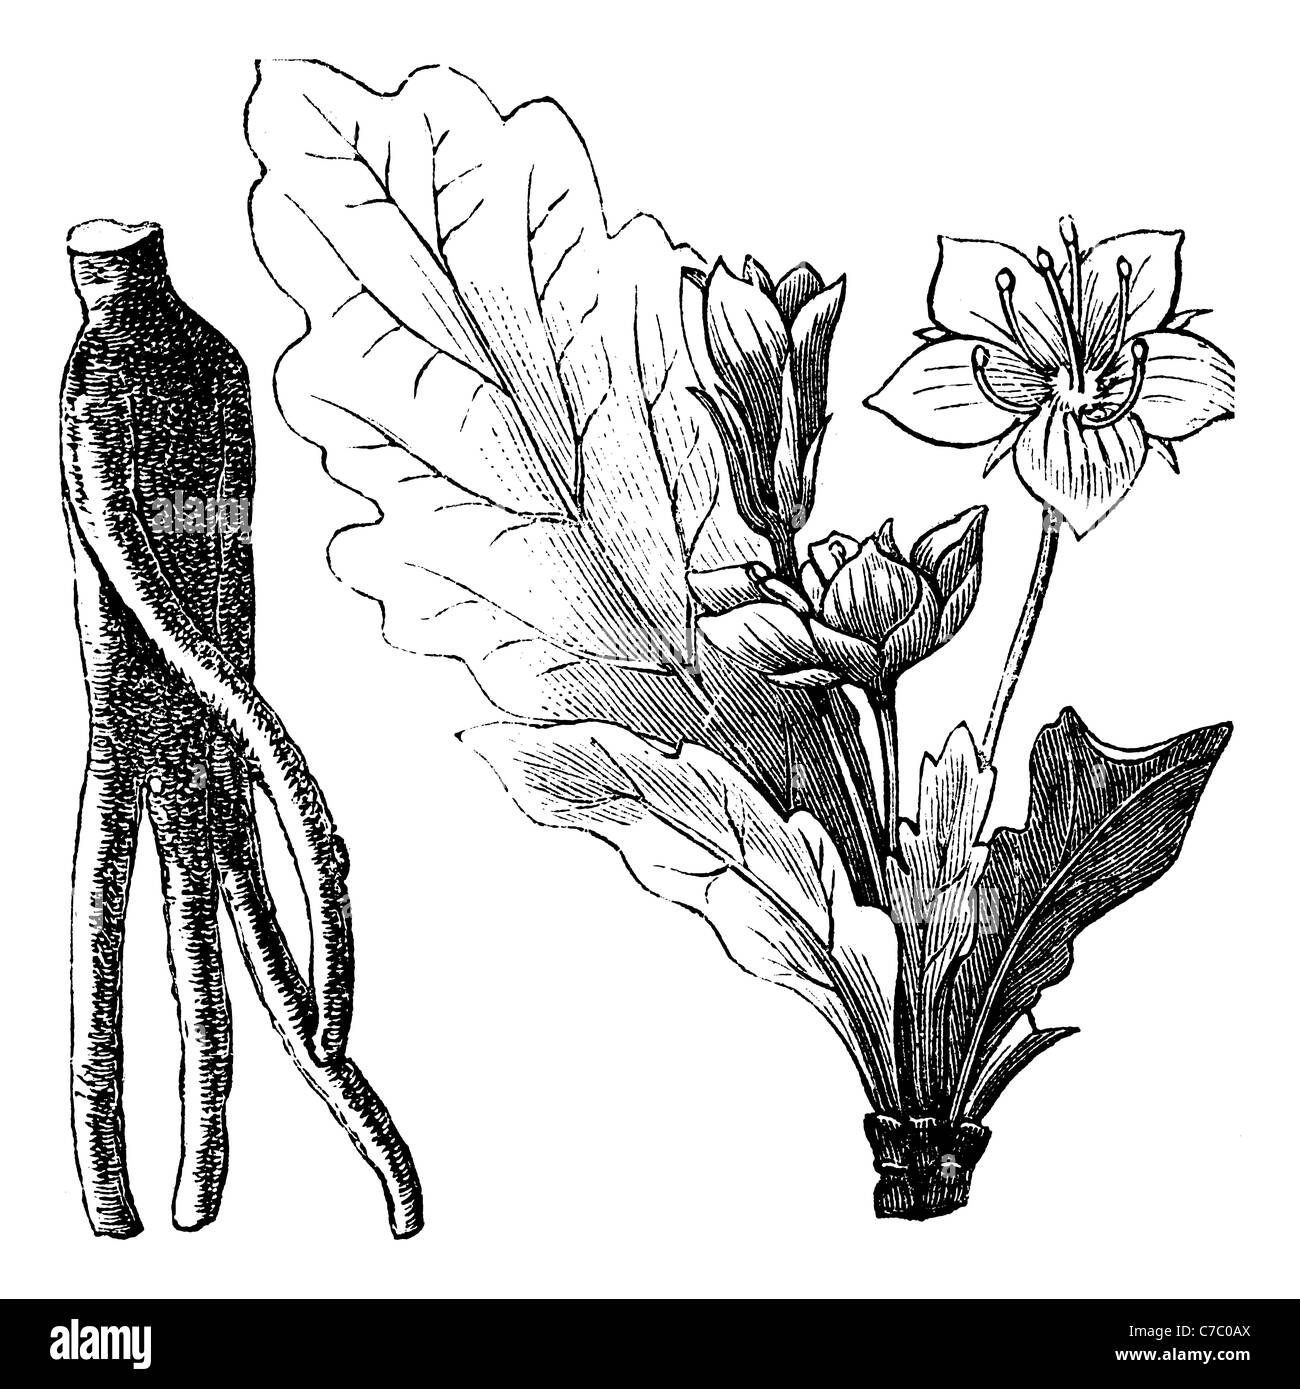 Mandrake root or Mandragora officinarum, vintage engraving. Old engraved illustration of Mandragora officinarum root. Stock Photo